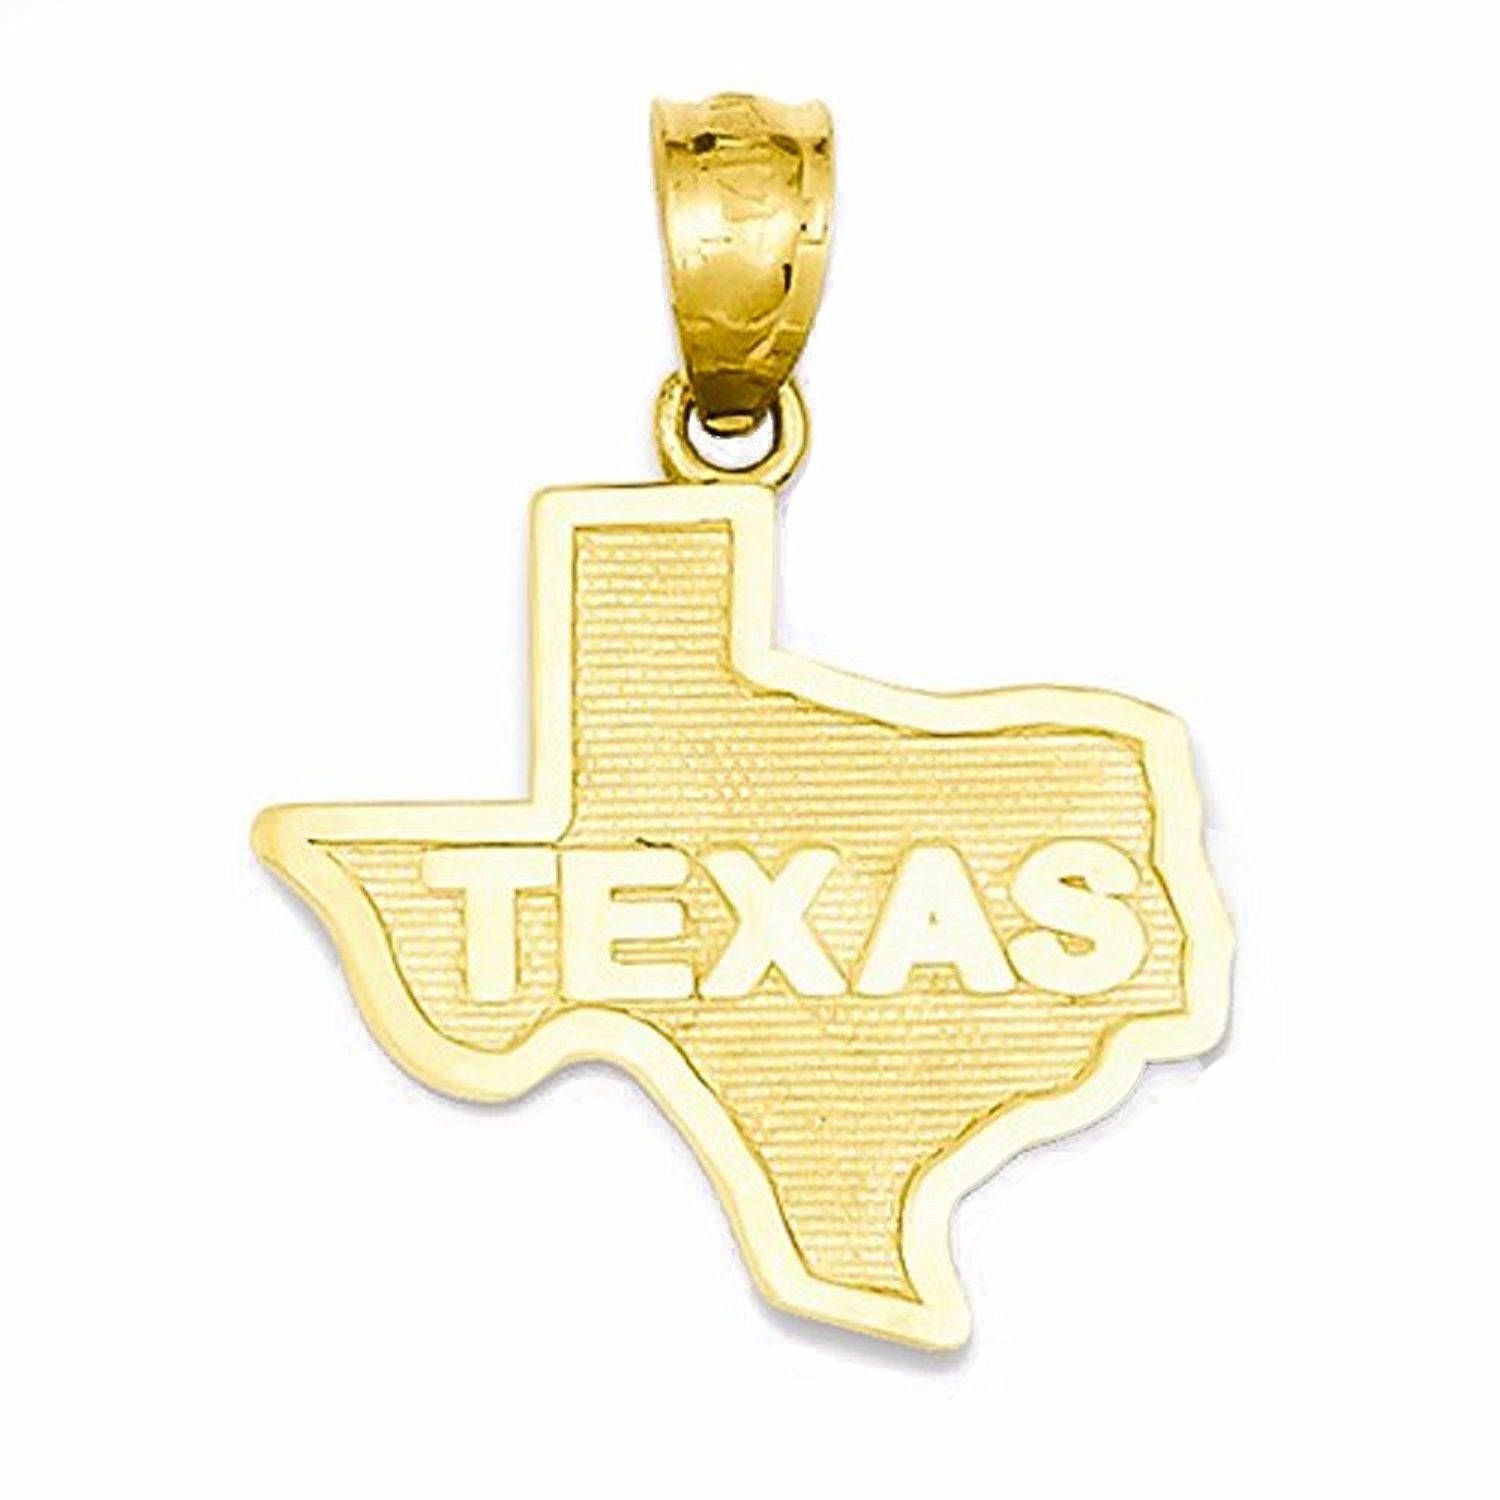 14k Yellow Gold Small Texas State Map Pendant Charm - [cklinternational]